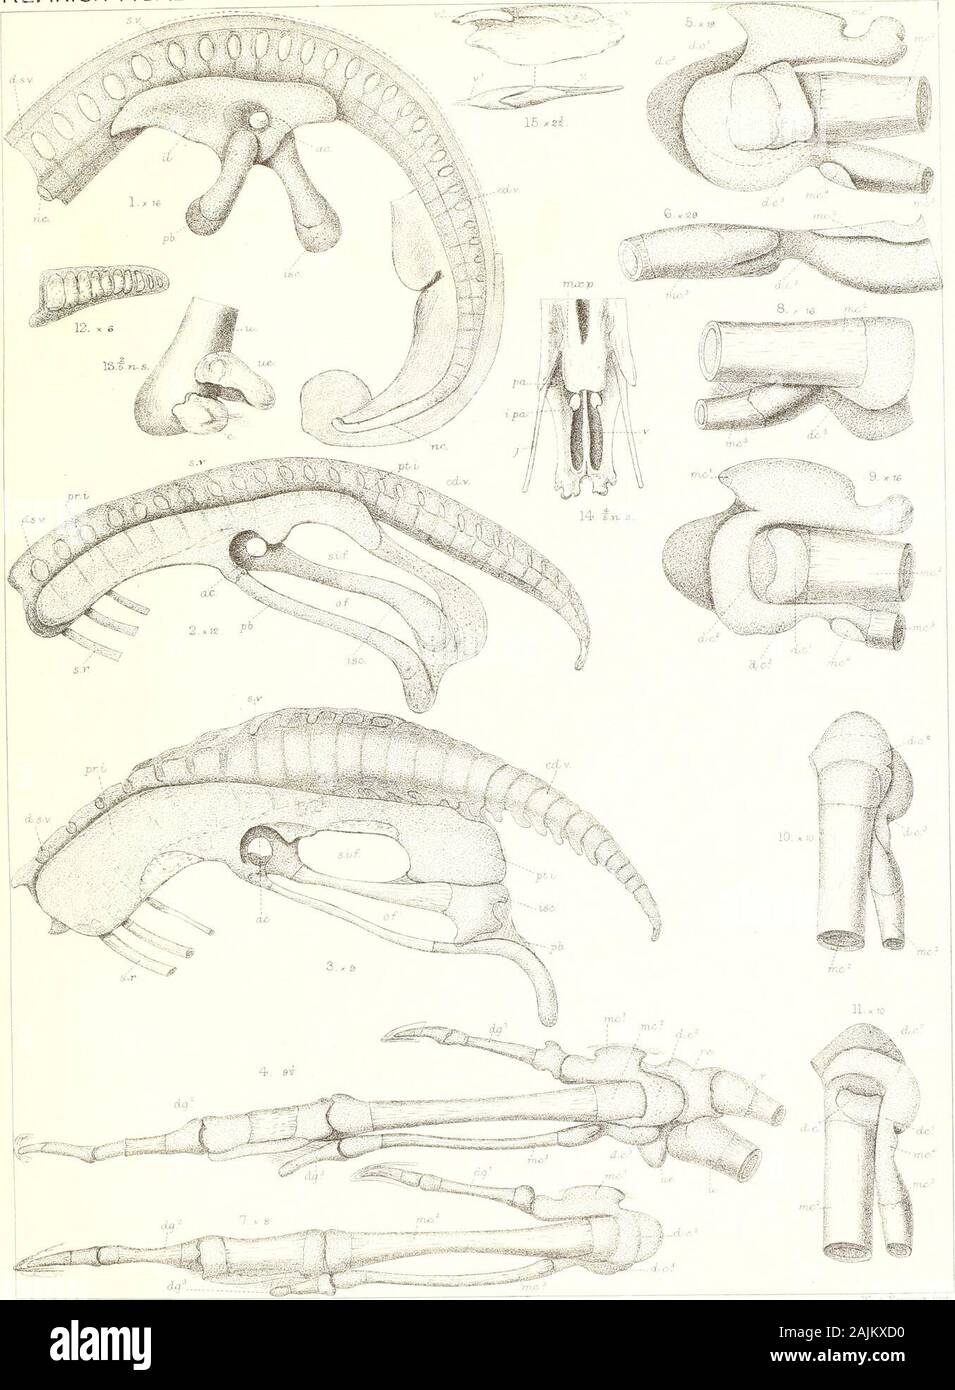 On the morphology of the duck and the auk tribes . l rib. e.ty. Tympanic cavity. nc. Notochord. s.ie. Supra-scapula. C.ll. Centralo-ulnare. «,/. Nasal floor. St. Sternum. e.v. Cervical vertebras. n.px. Nasal process of pre-ruaxil- st./t. Sternal keel. ll. Dentary. lary. s.r. Sacral vertebra. d.c. Distal carpal. ob.f. Obturator fenestra. tb. Tibial. thj. Digit. oc.c. Occipital condyle. t.c. Tendon-canal. d.t. Distal tarsal. Oil.p. Odontoidprocess. te. Tibiale. tie. Dorsal rib. op. Opisthotie. t.eo. Tympanic wing of occipital d.s.v. Dorso-sacral vertebras, o.s. Orbitosphenoid. ts. Tarsal. d.v. D Stock Photo